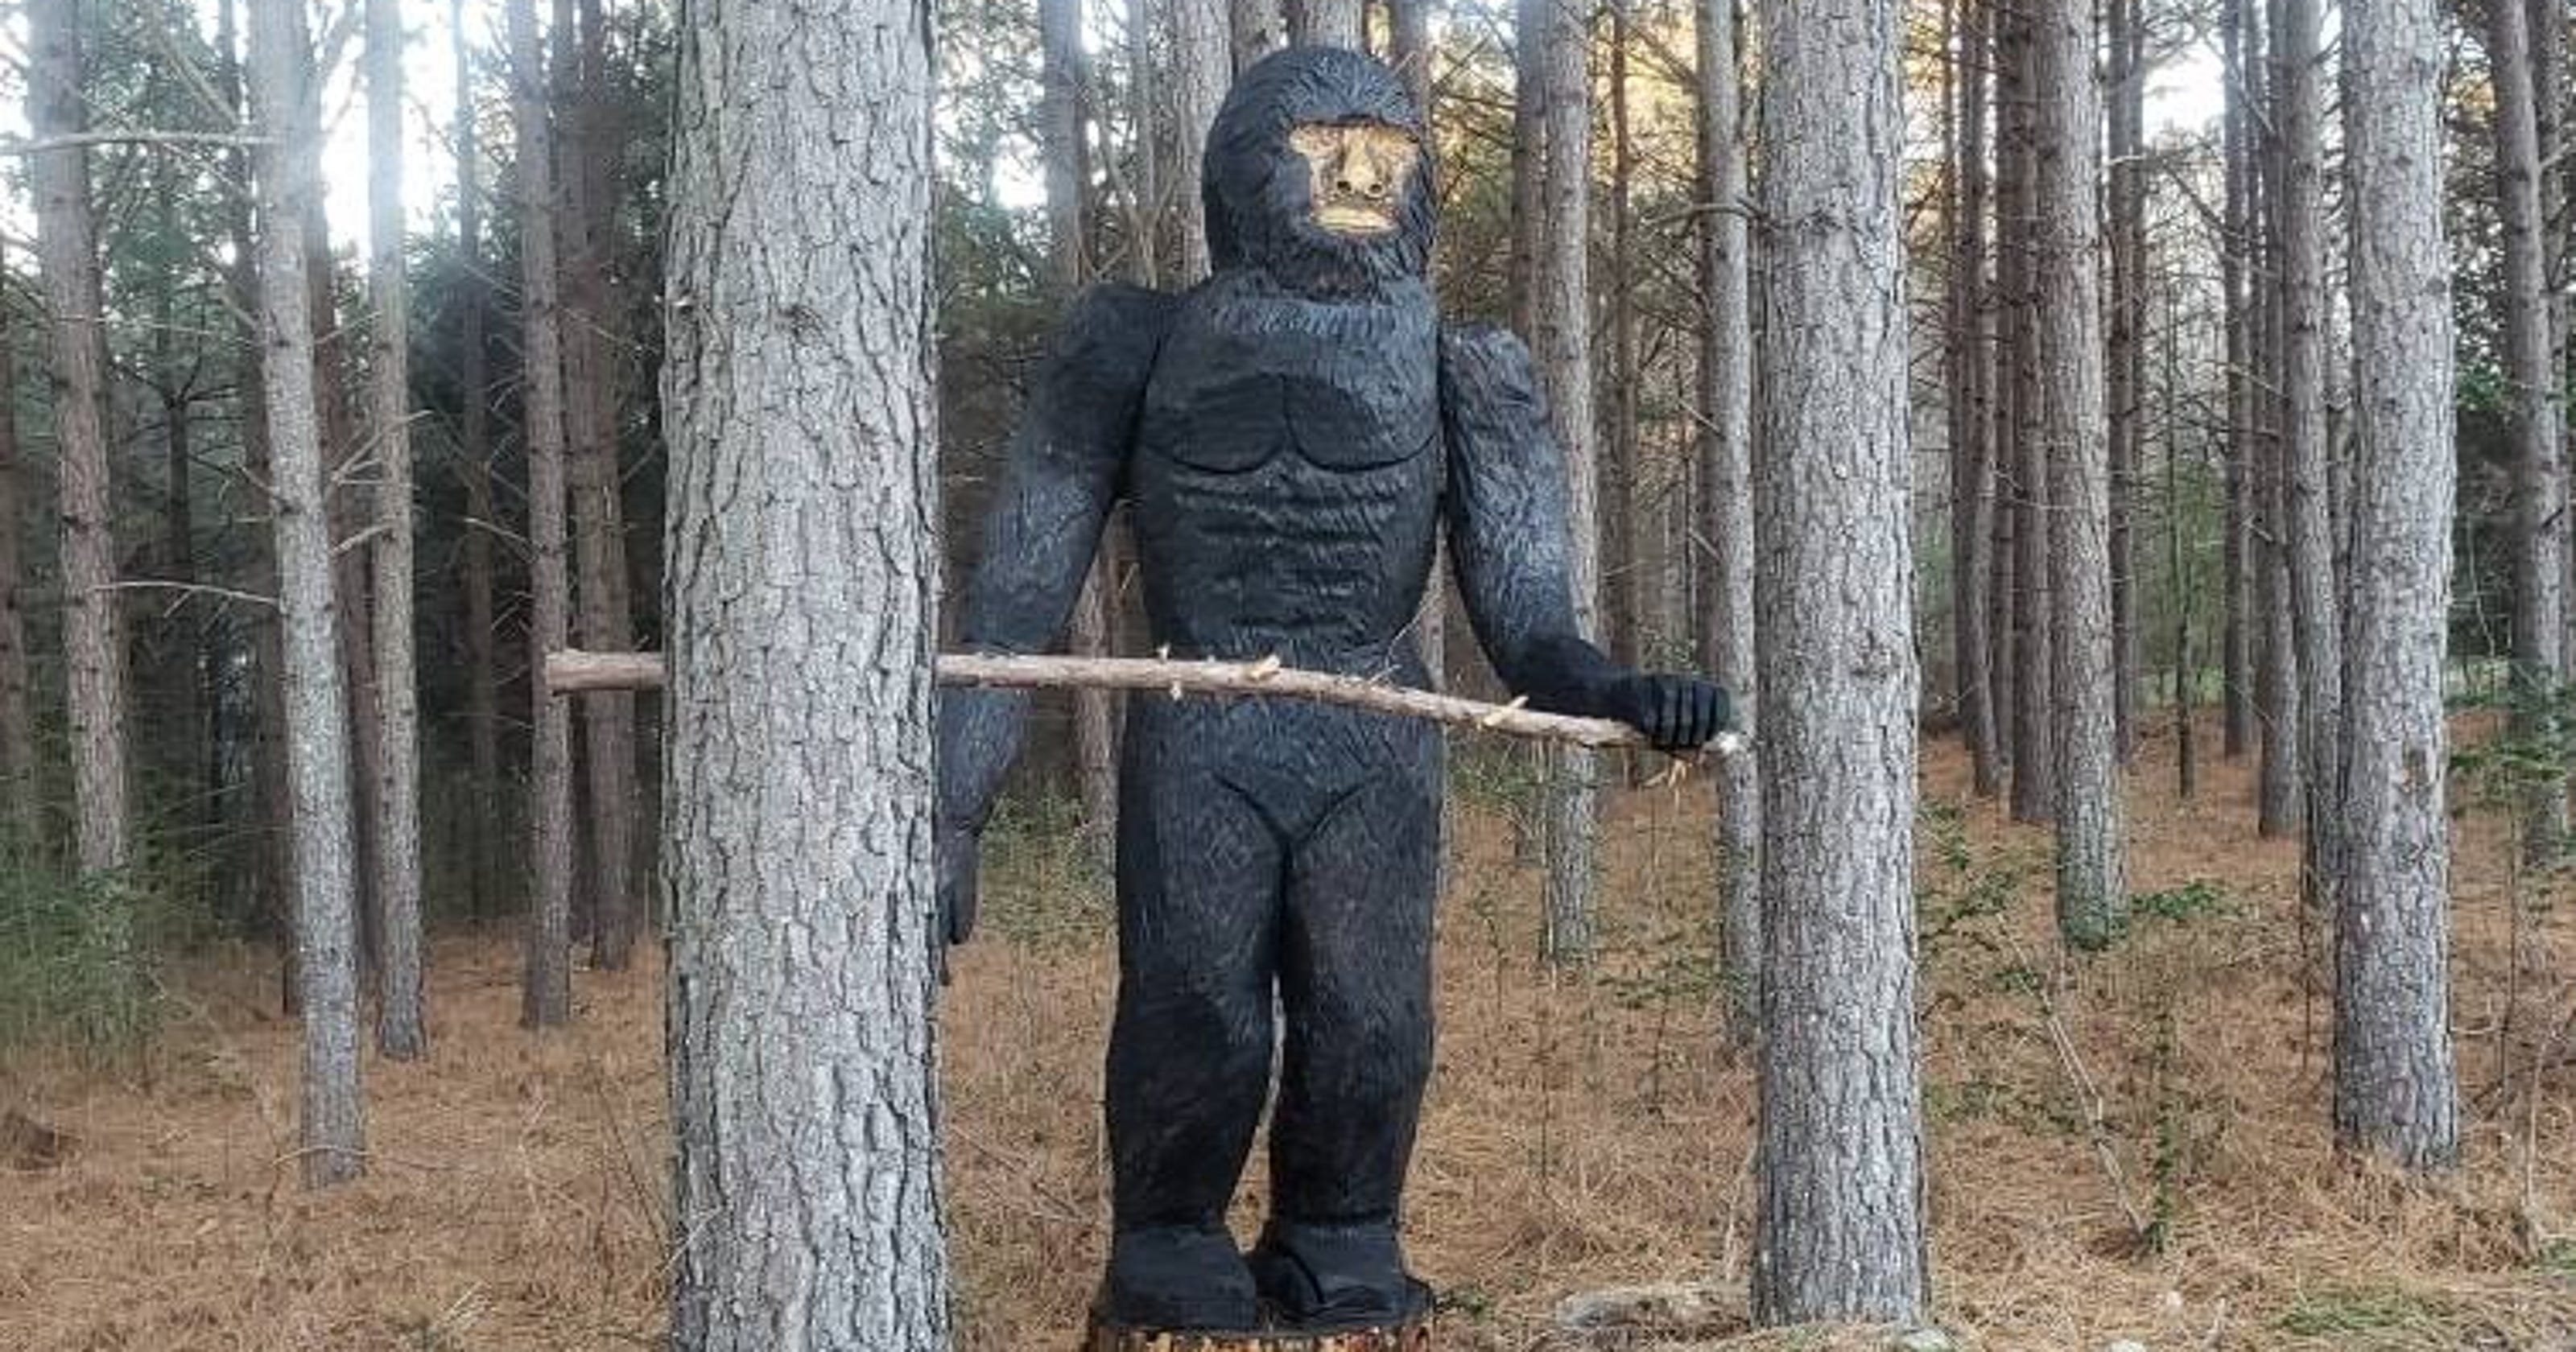 Bigfoot sightings in North Carolina? No, it was a statue not Sasquatch